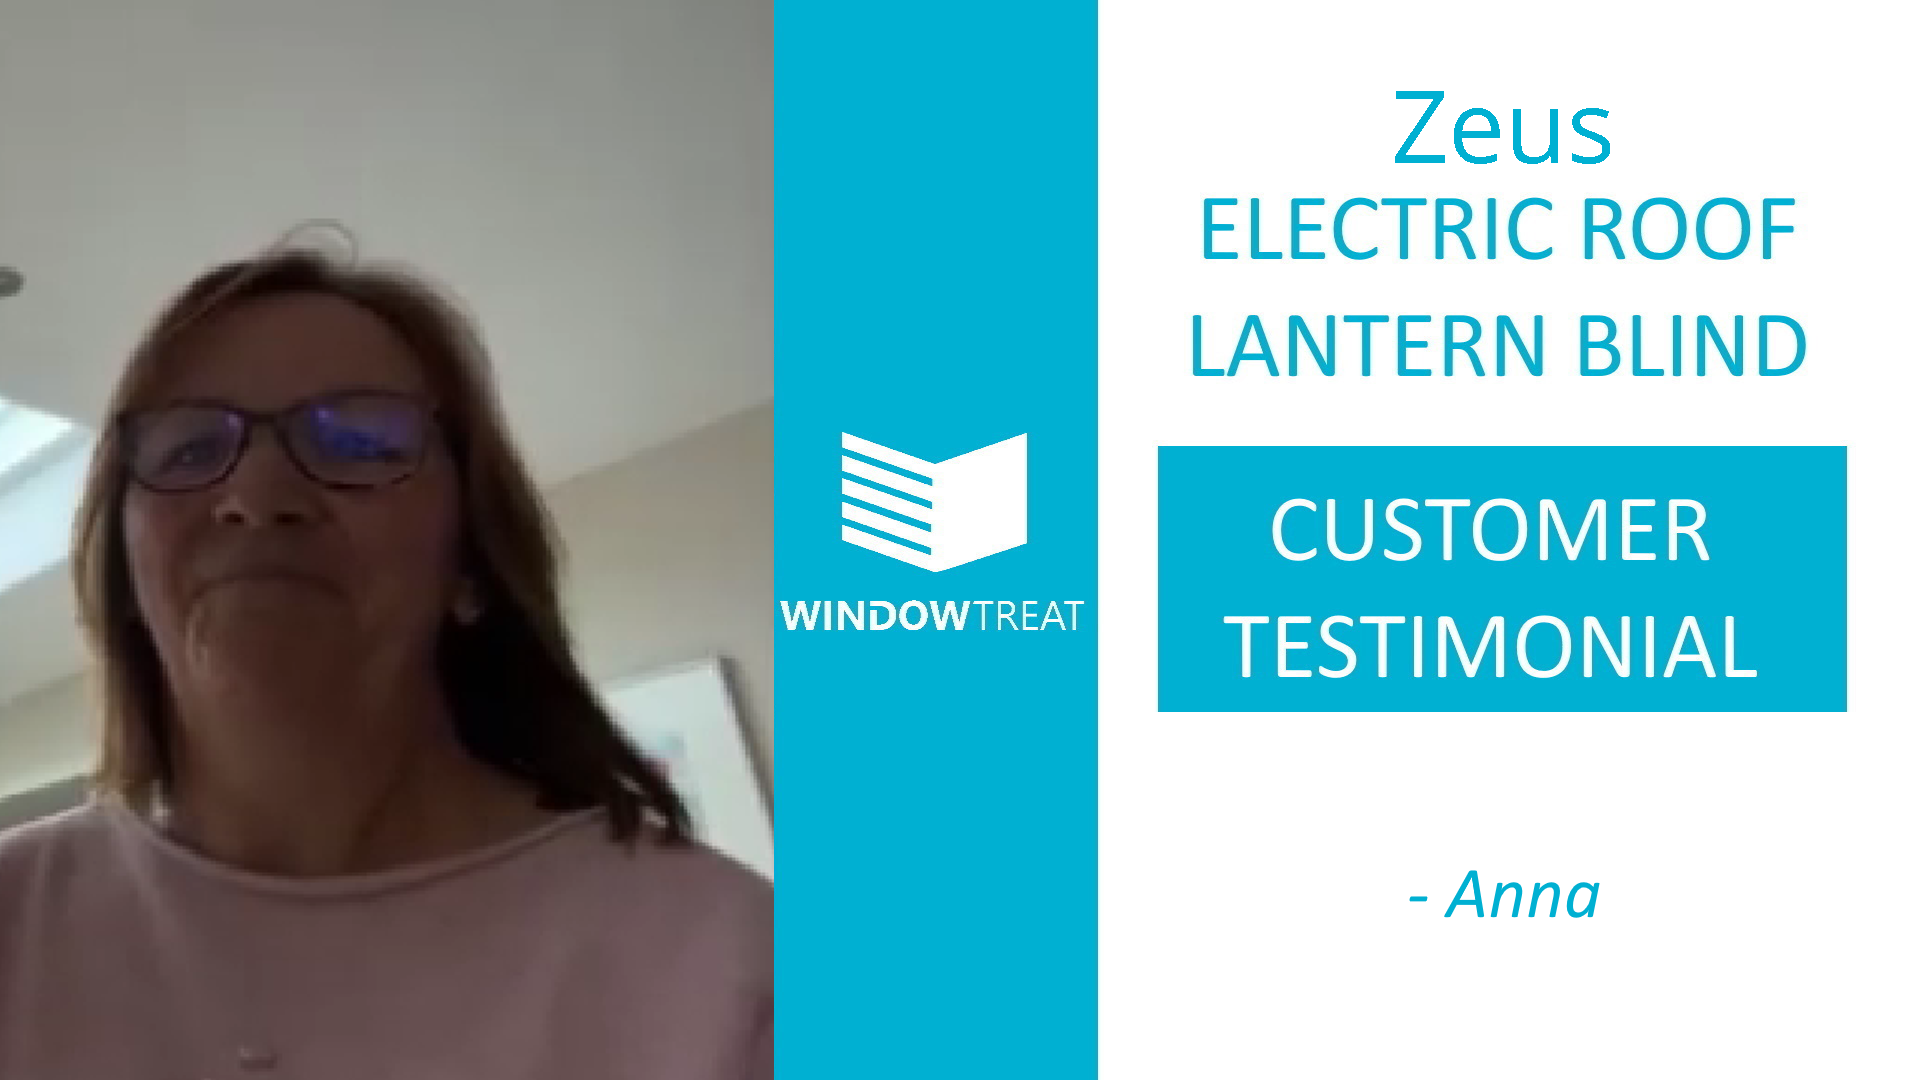 Customer Testimonial For Zeus Electric Roof Lantern Blind - Anna